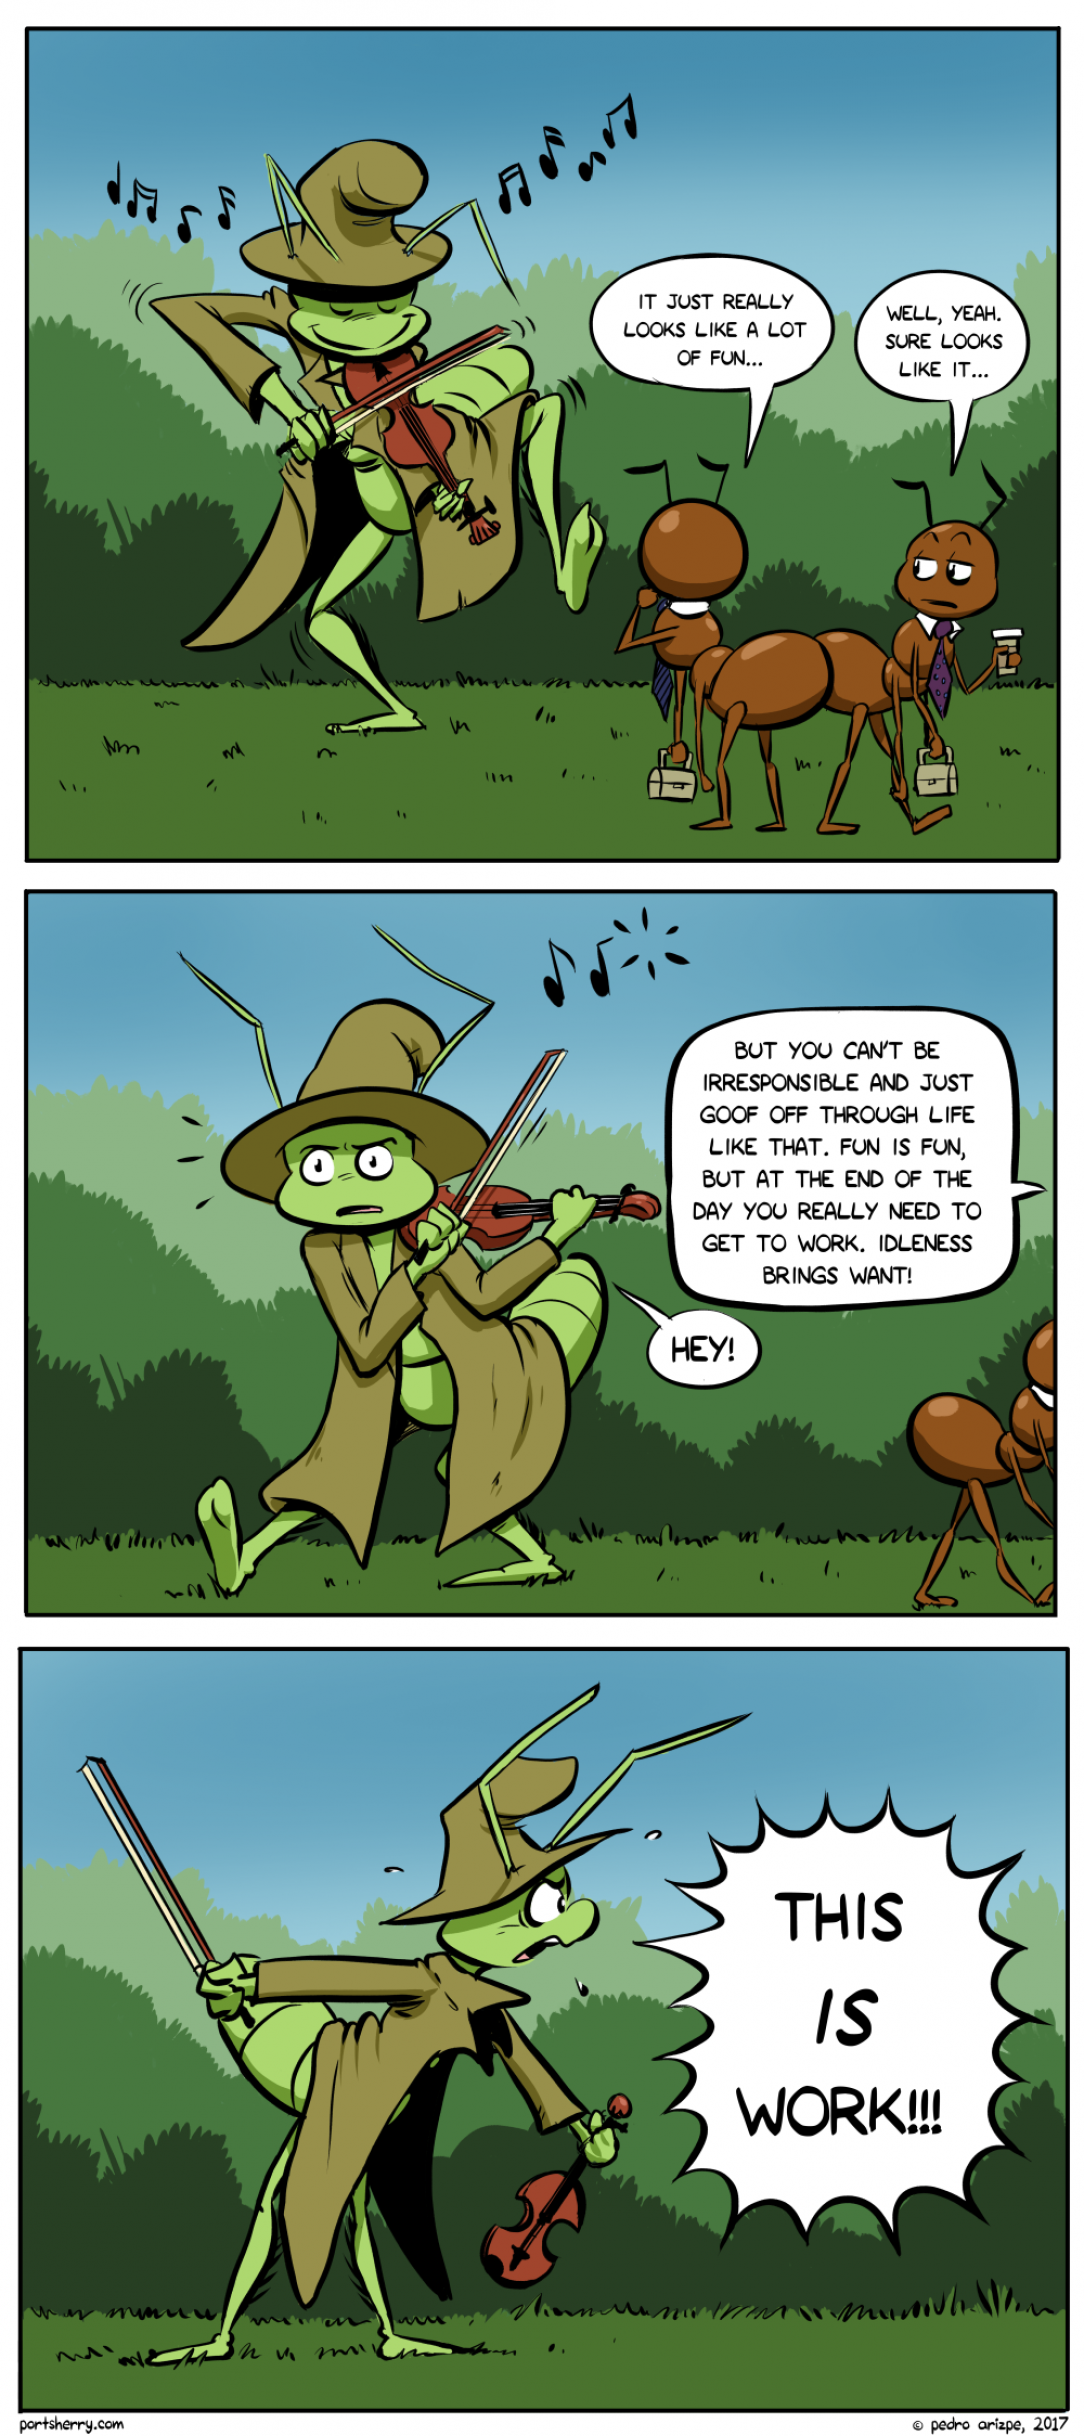 Those useless grasshoppers